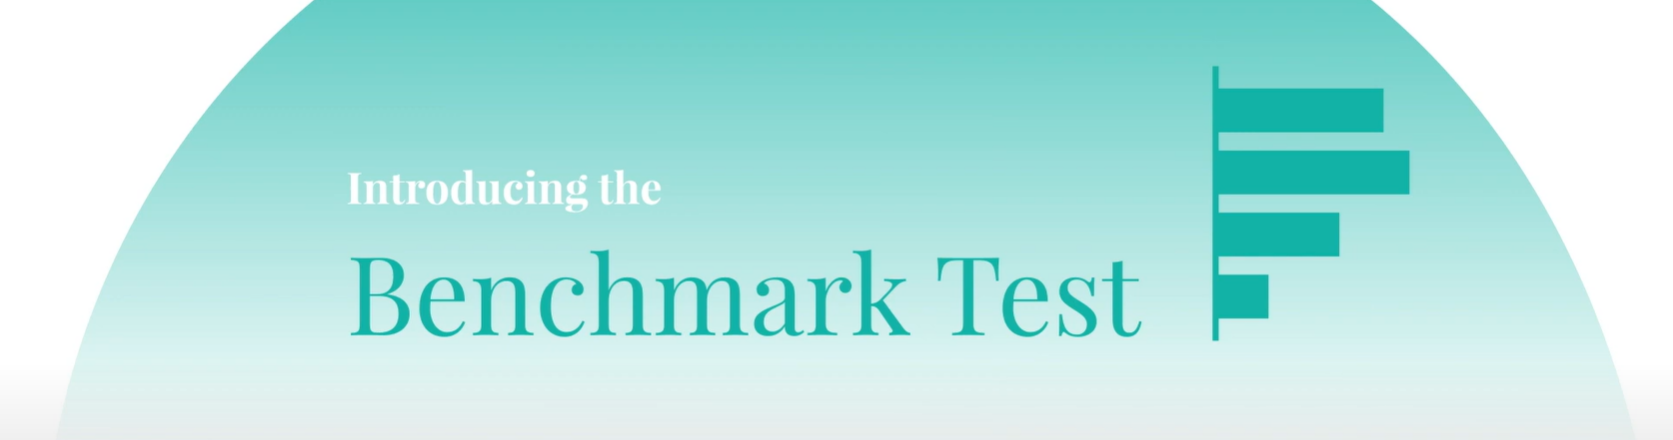 benchmark test banner